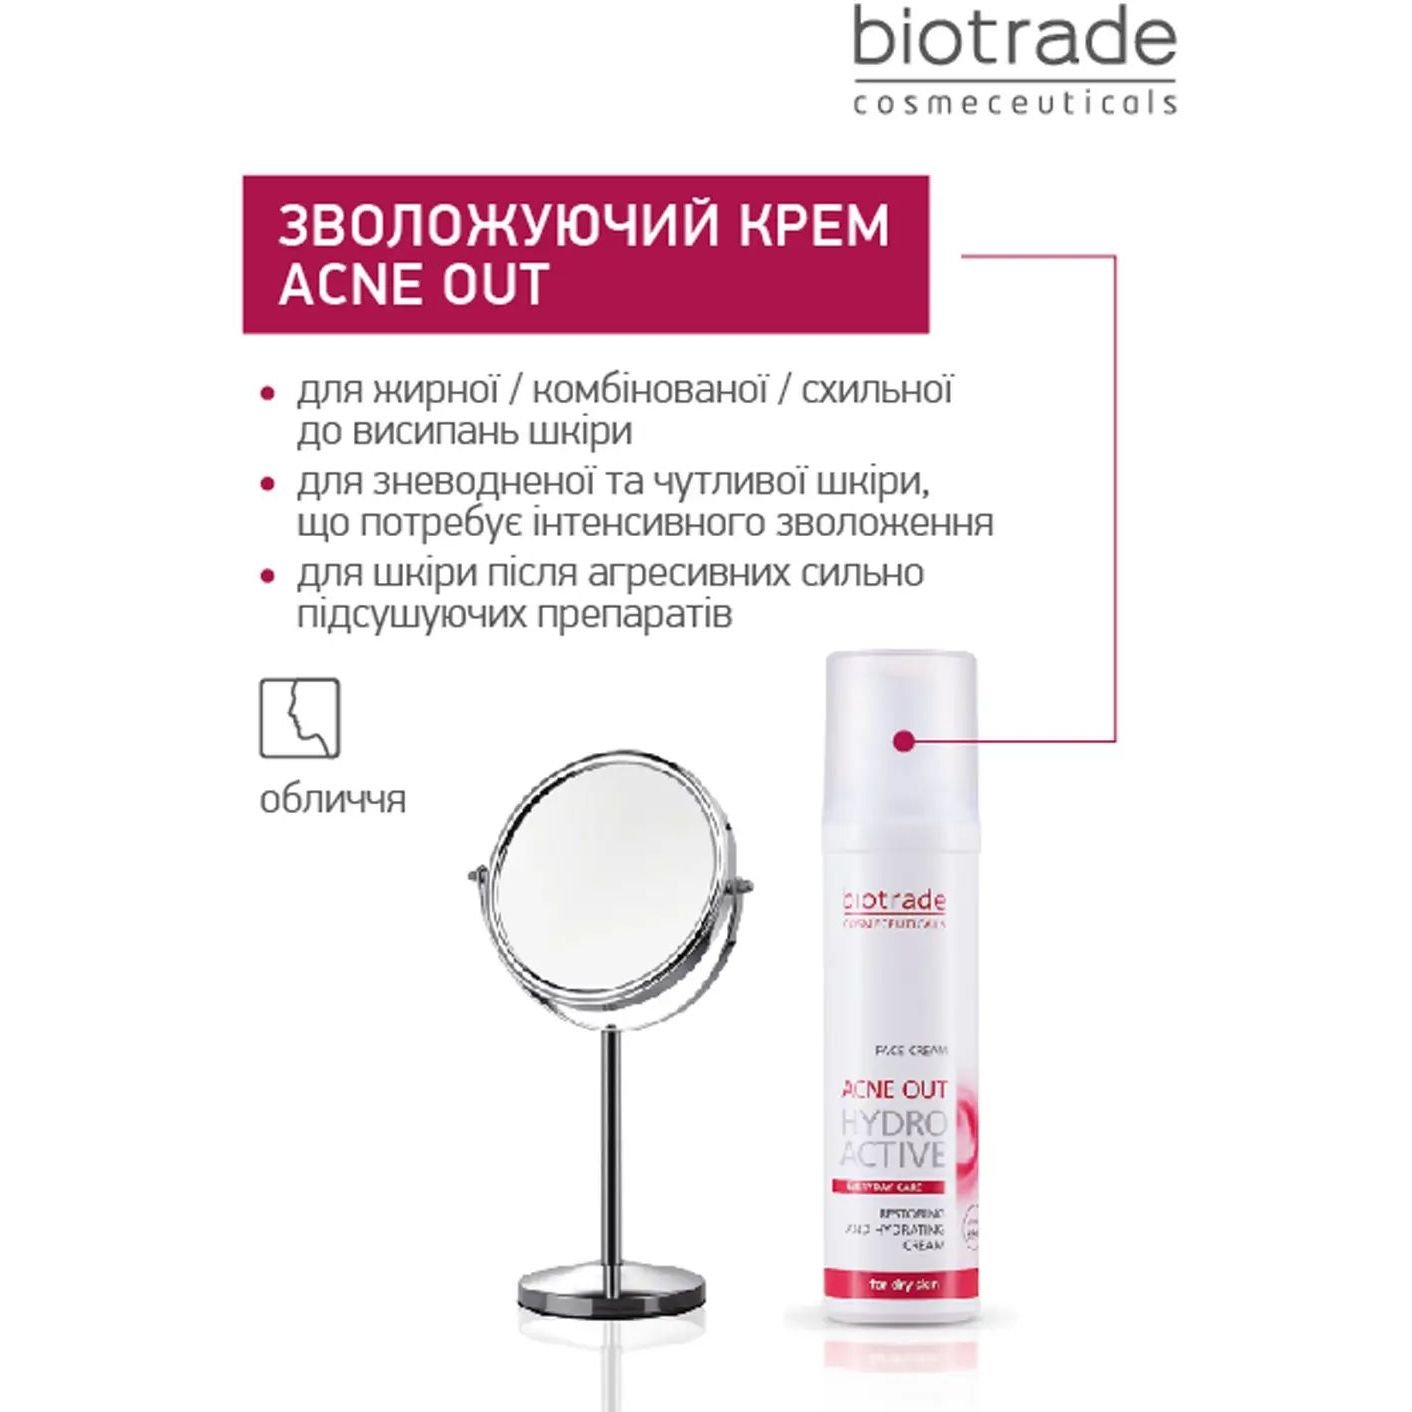 Зволожувальний крем для обличчя Biotrade Acne Out Hydro Active 60 мл (3800221840396) - фото 2